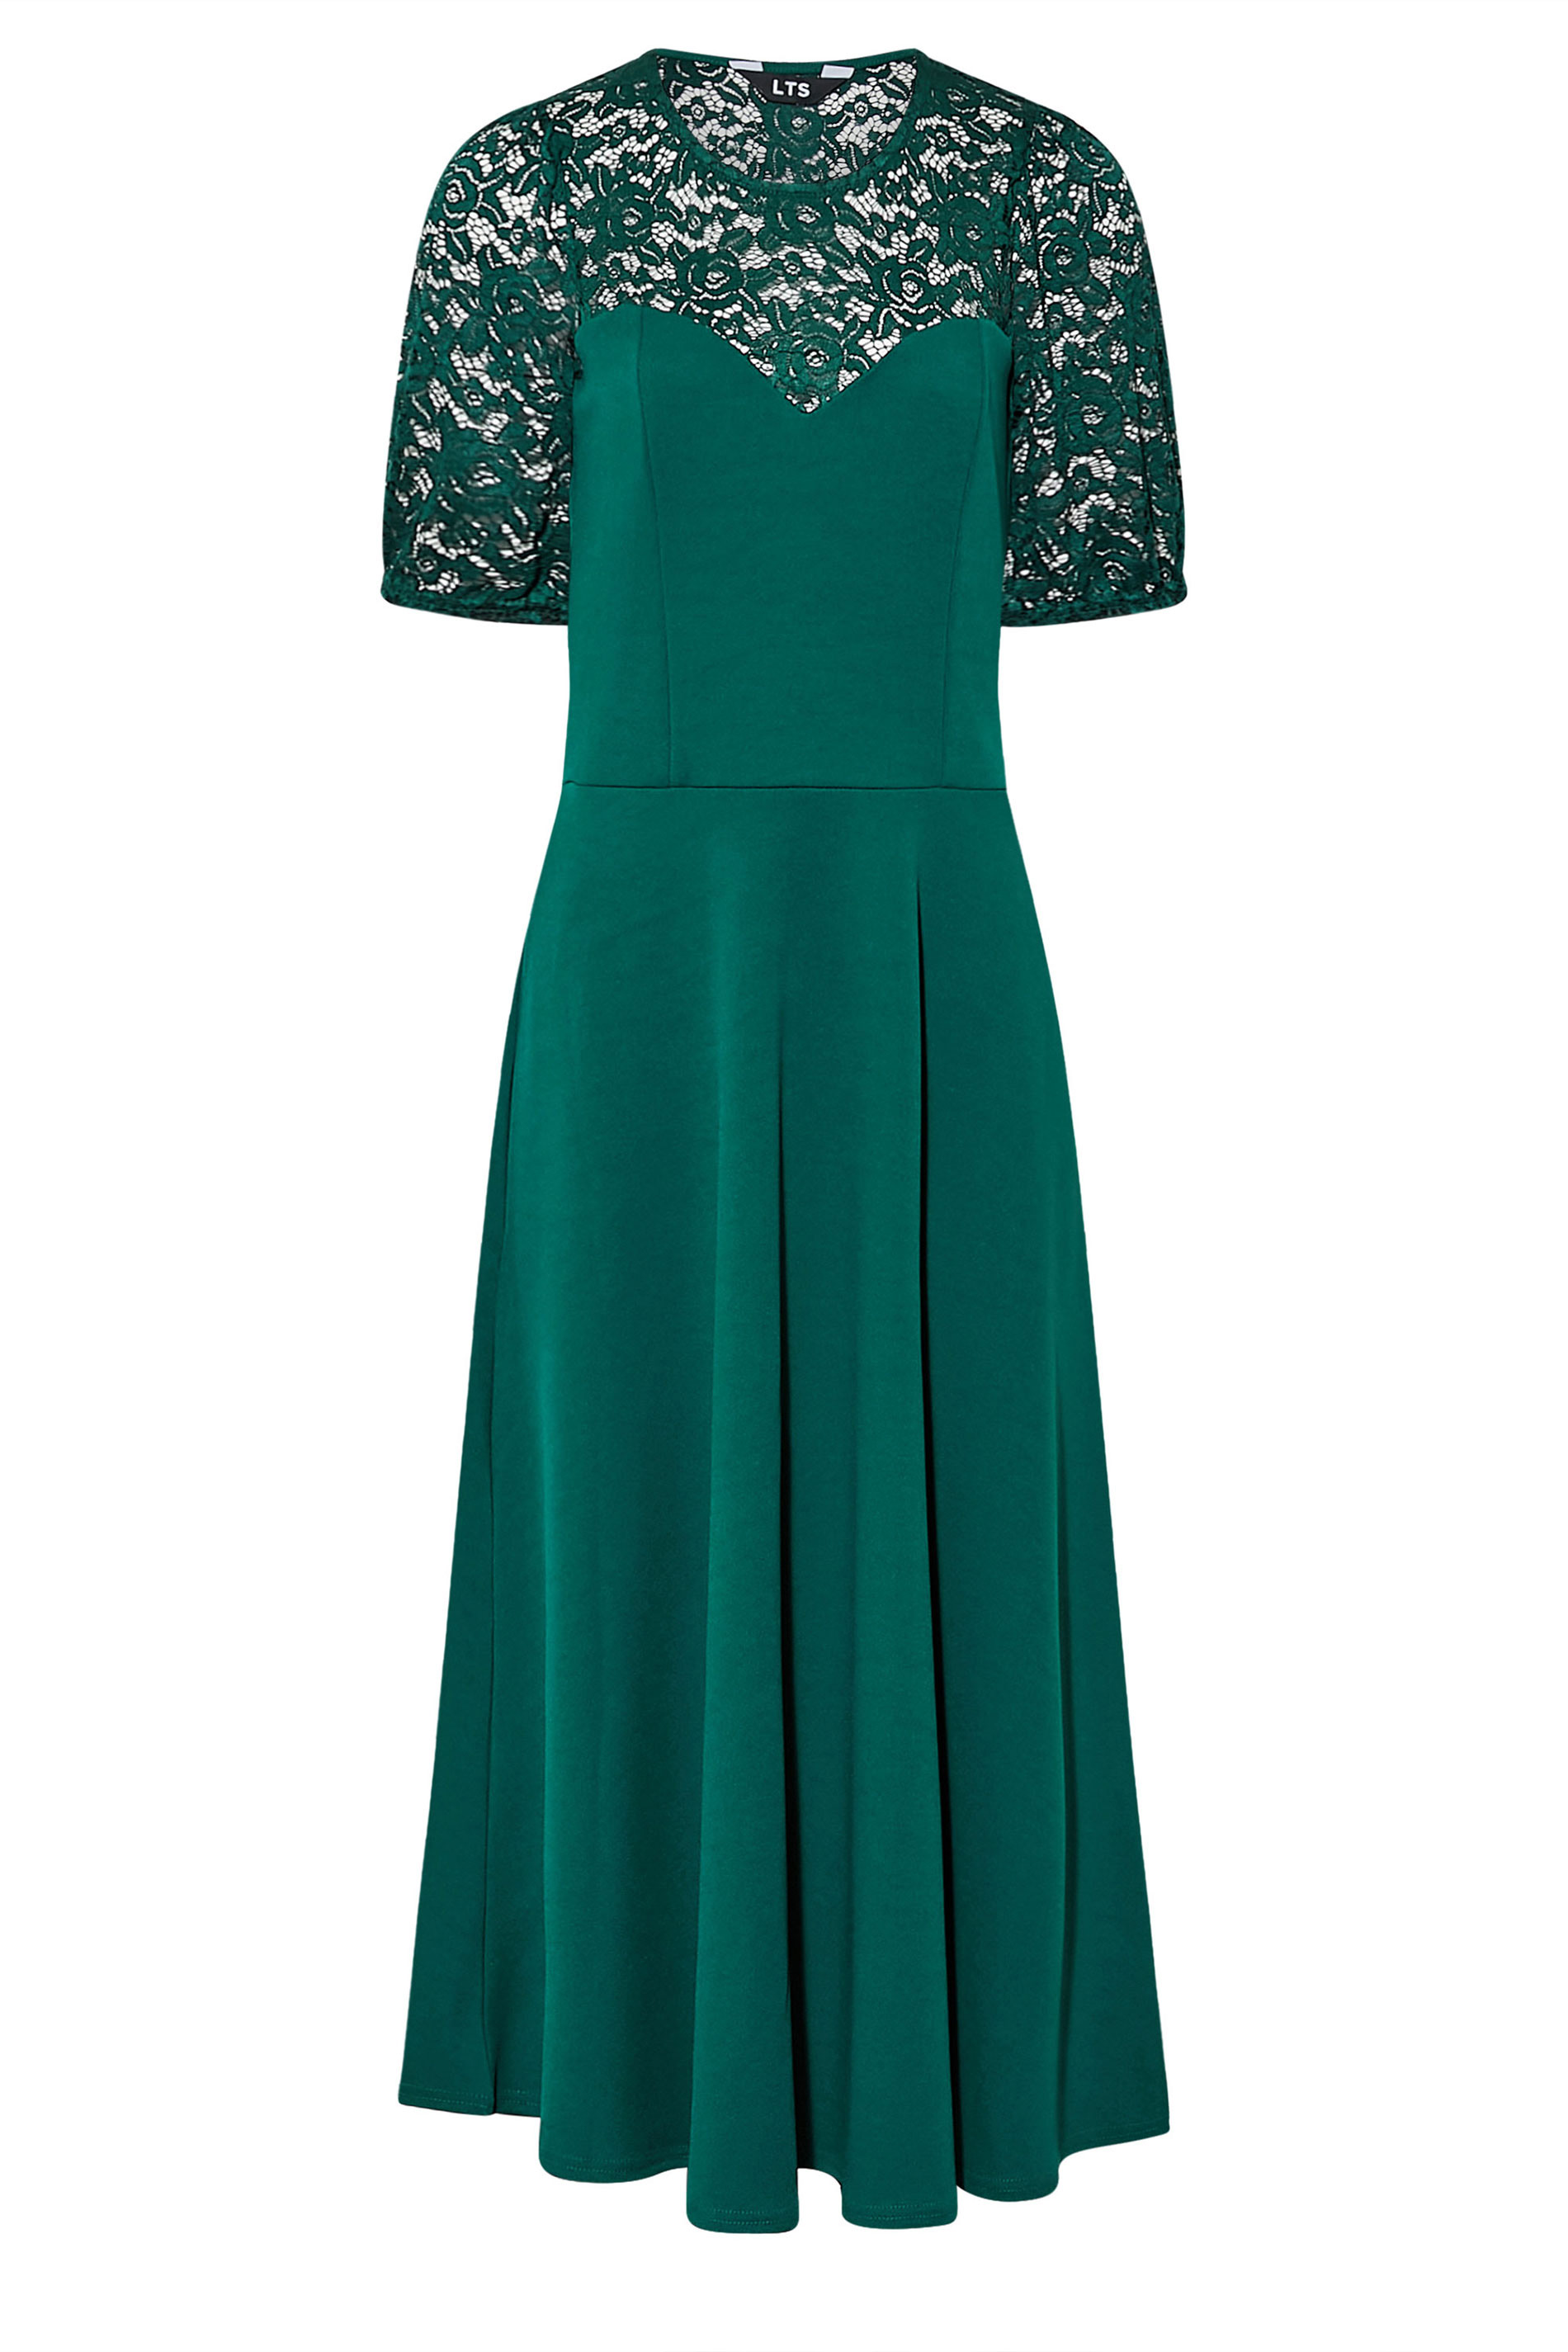 Tall Women's LTS Forest Green Lace Midi Dress | Long Tall Sally 2